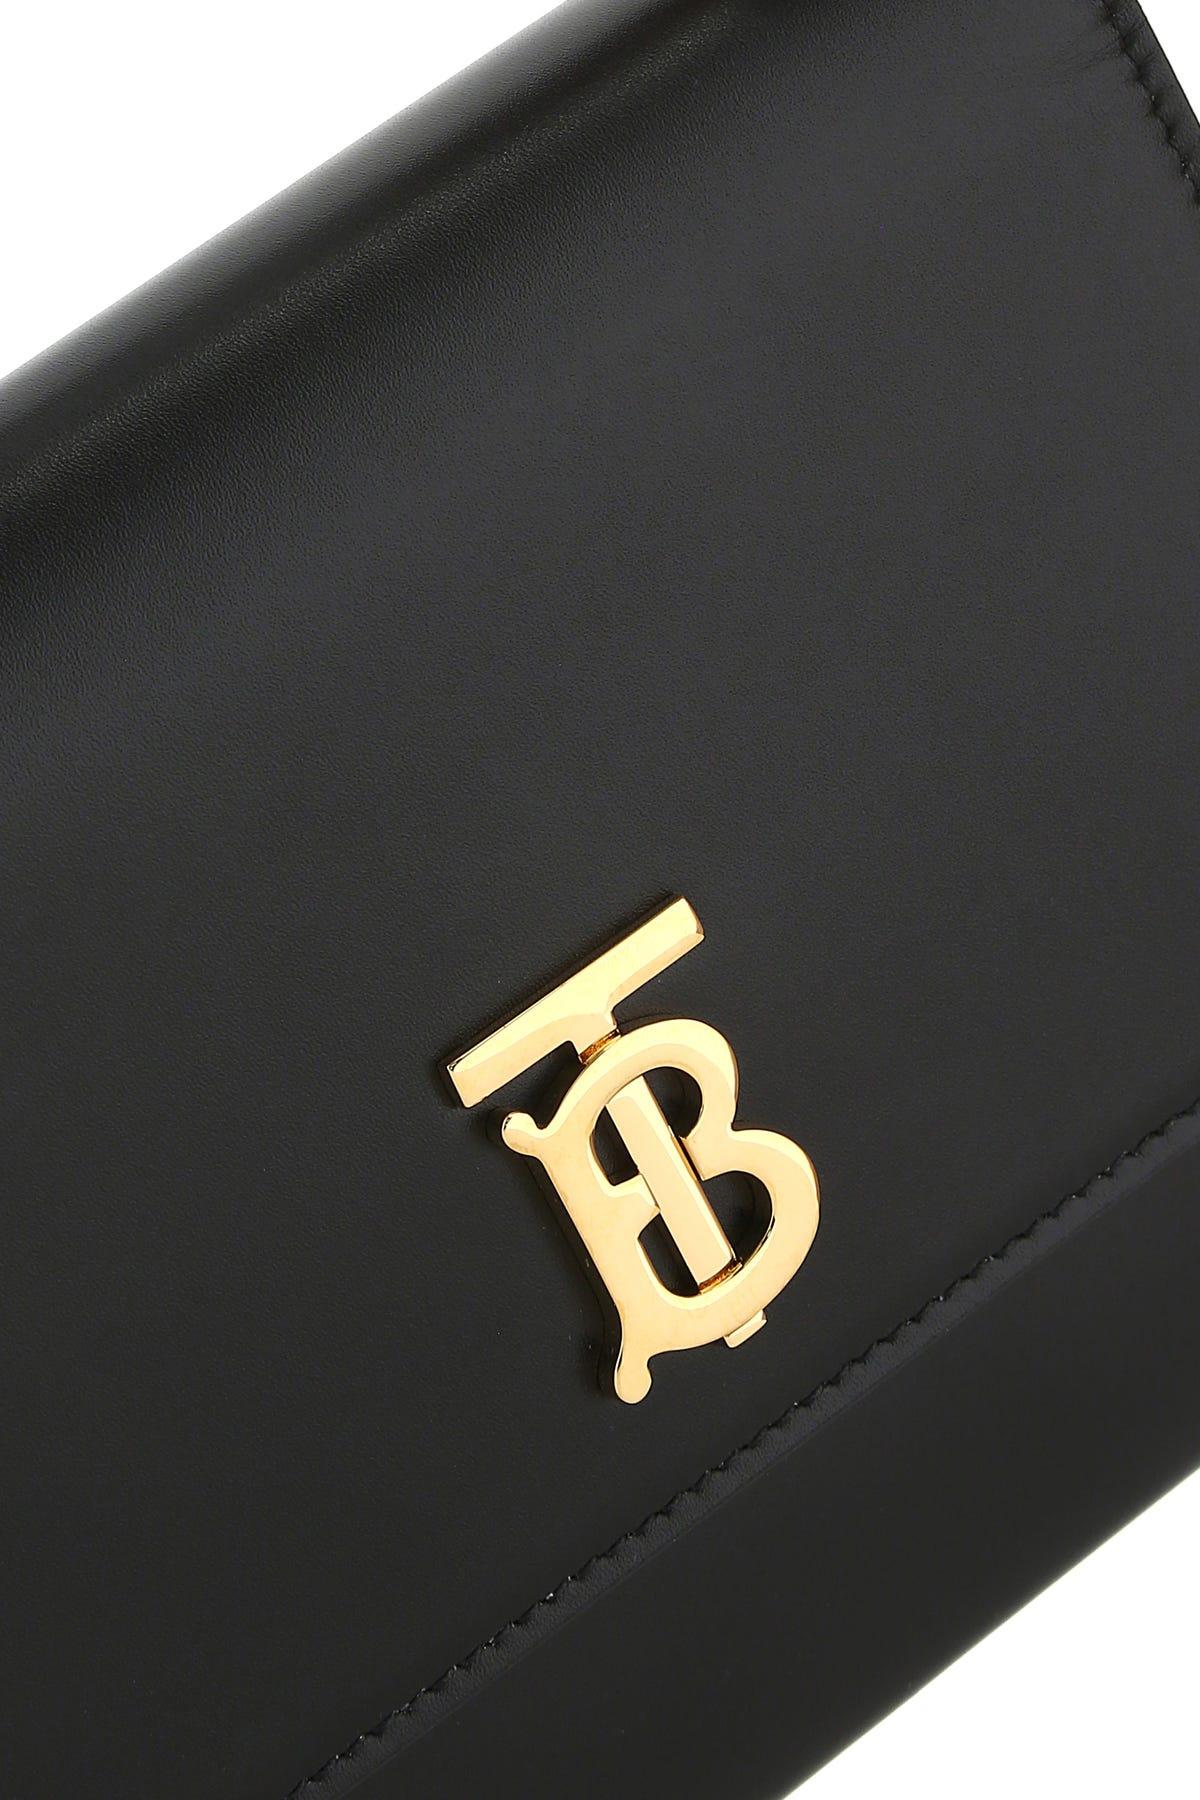 Burberry Black Leather Mini Tb Crossbody Bag | Lyst